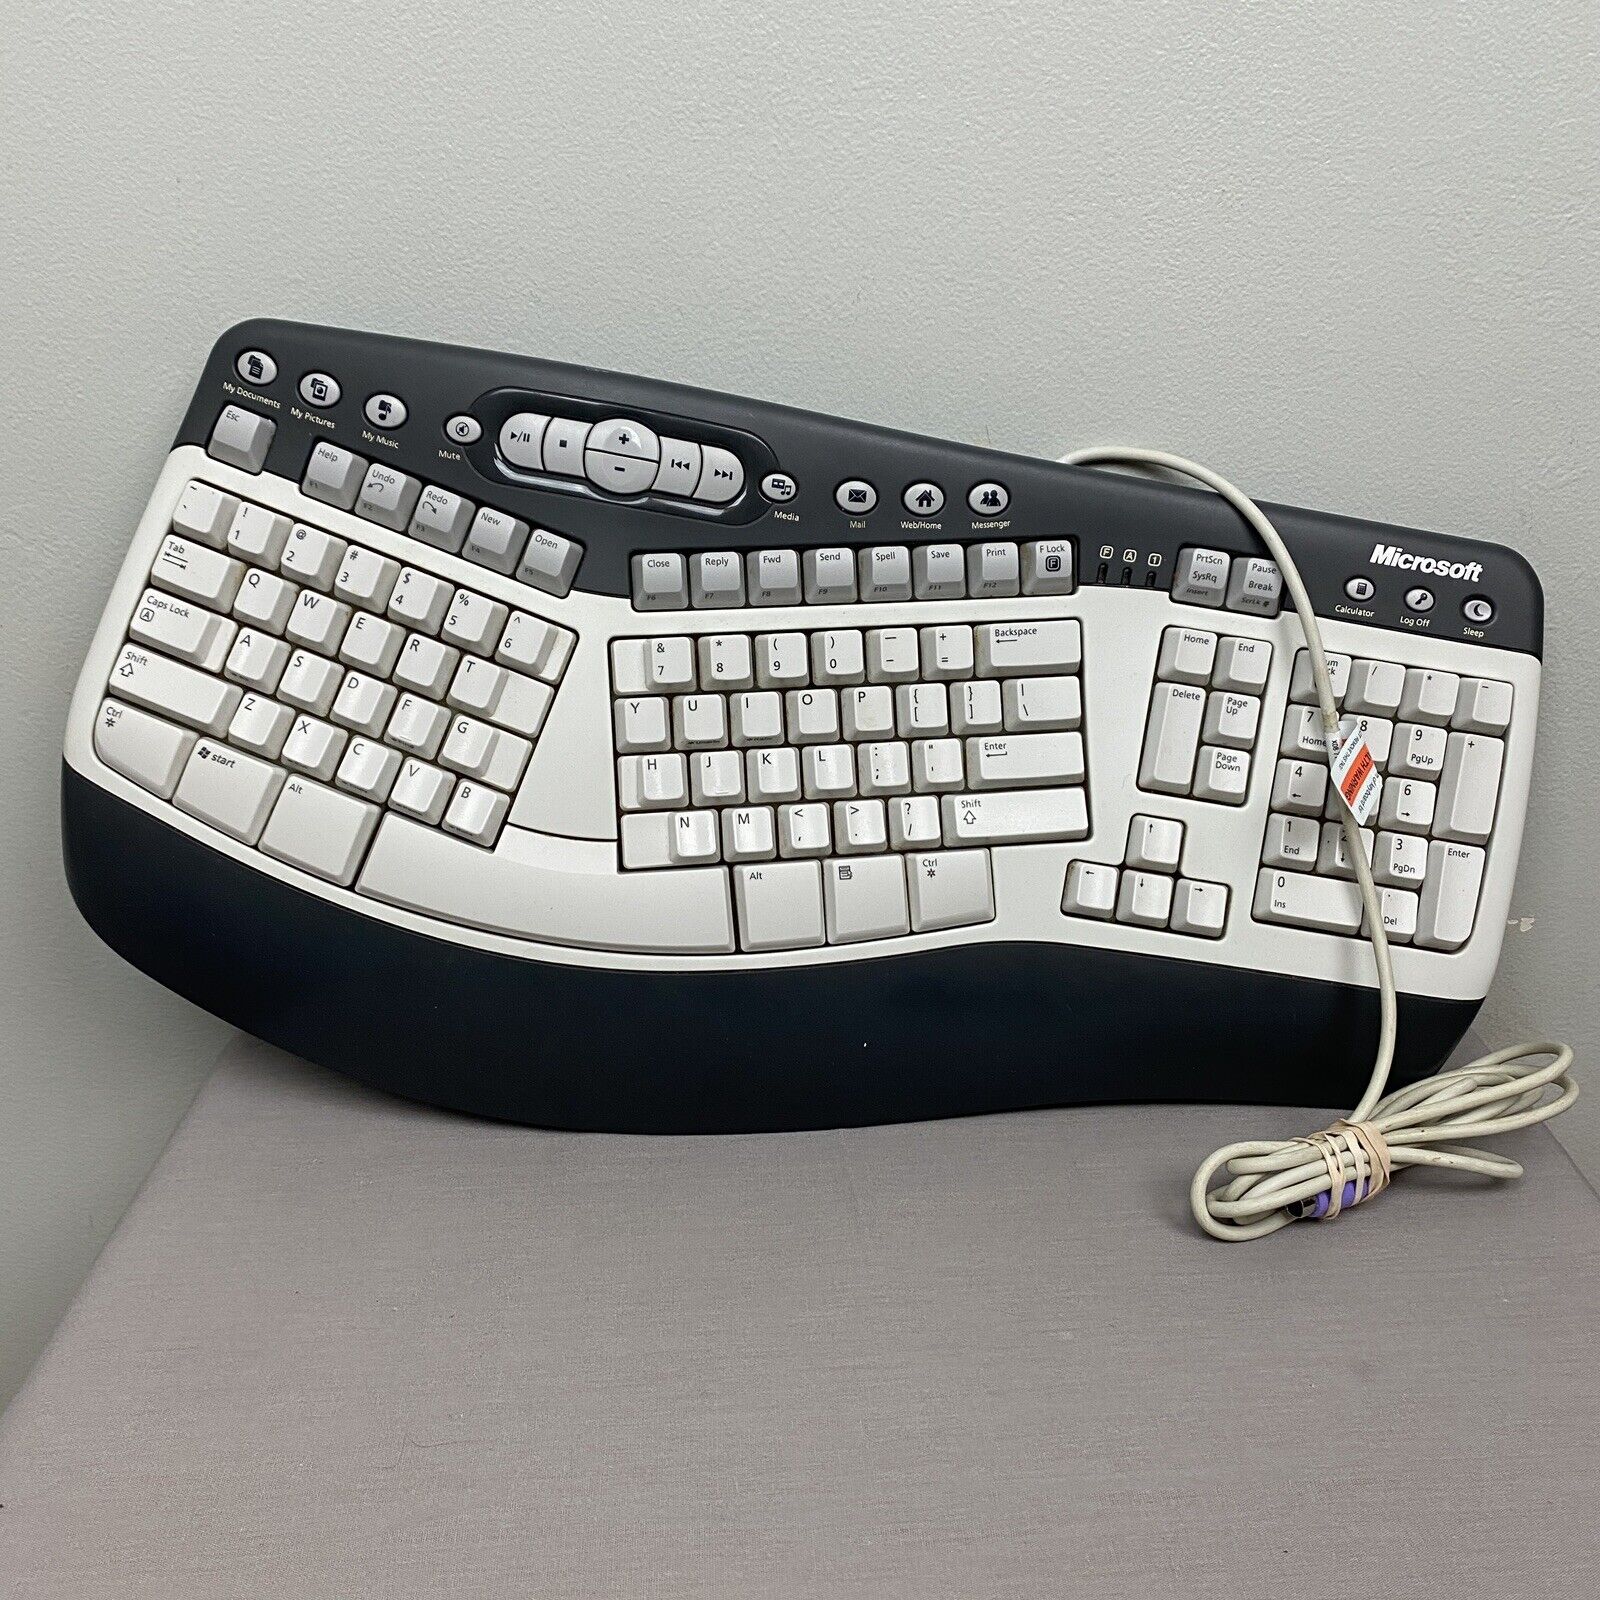 Microsoft Natural MultiMedia Keyboard 1.0A Ergonomic PS/2 Gray White Untested